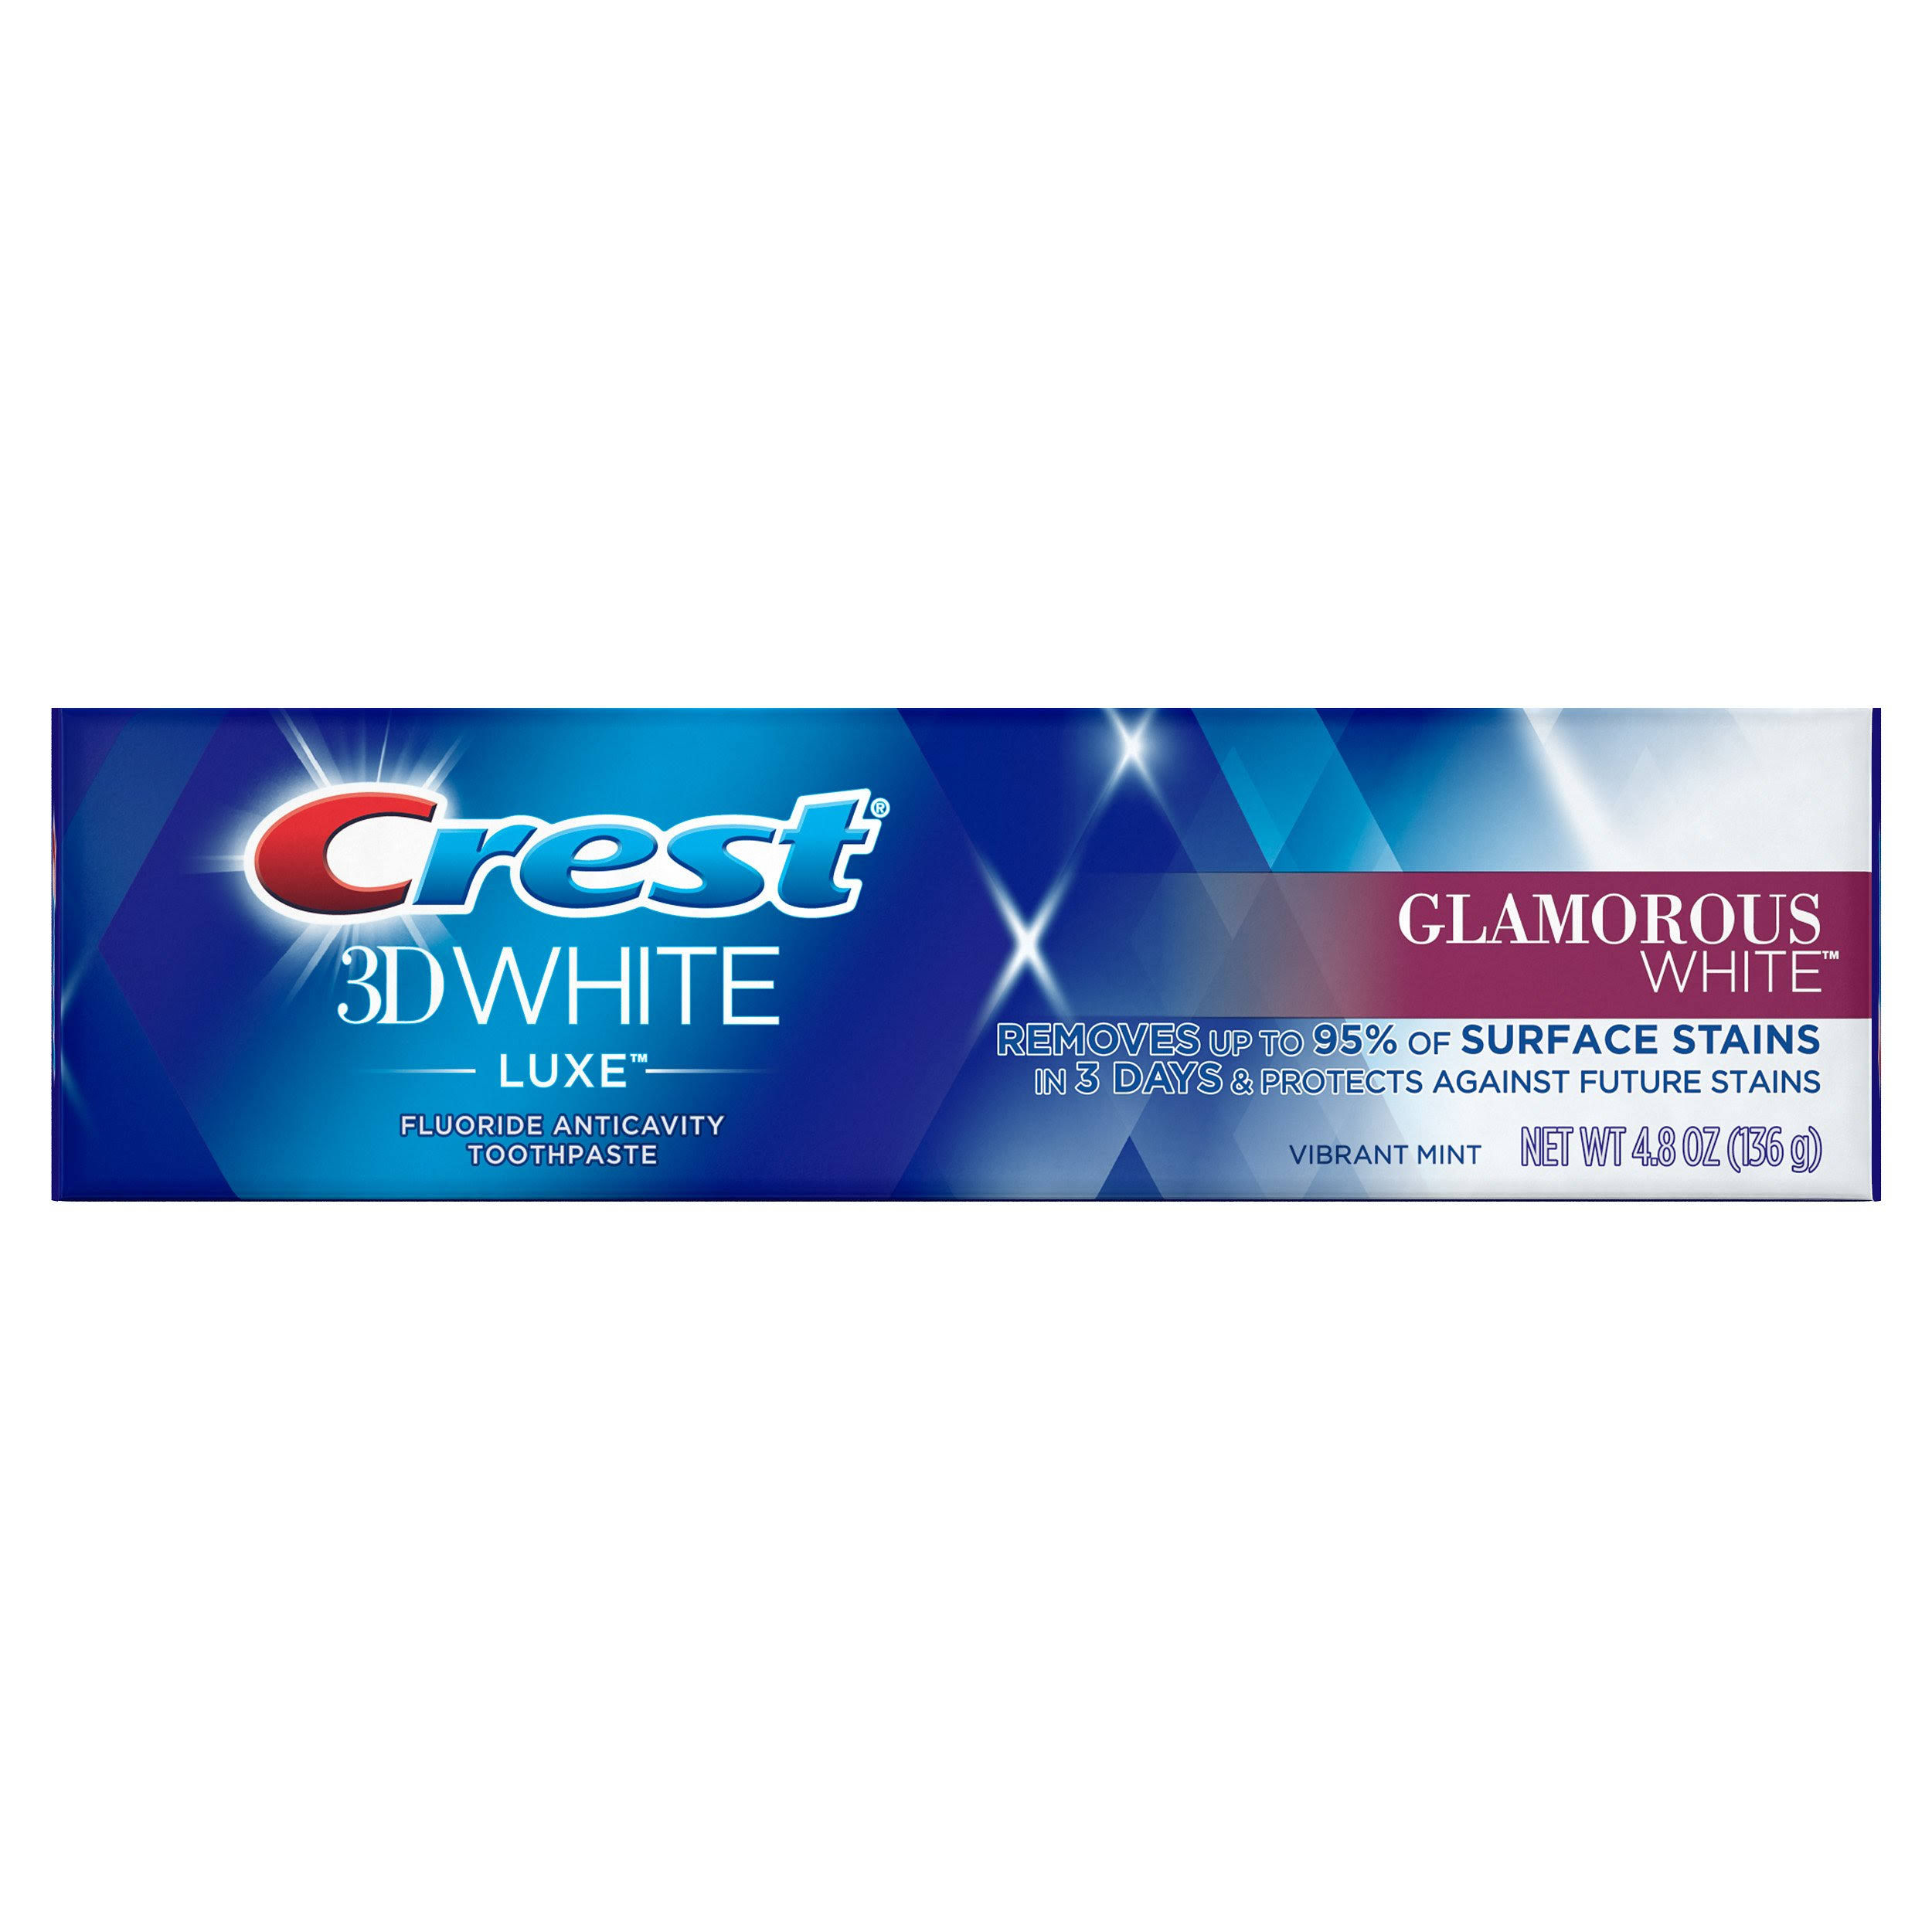 Crest 3D White Luxe Glamorous White Fluoride Anticavity Toothpaste - Vibrant Mint, 3.5oz